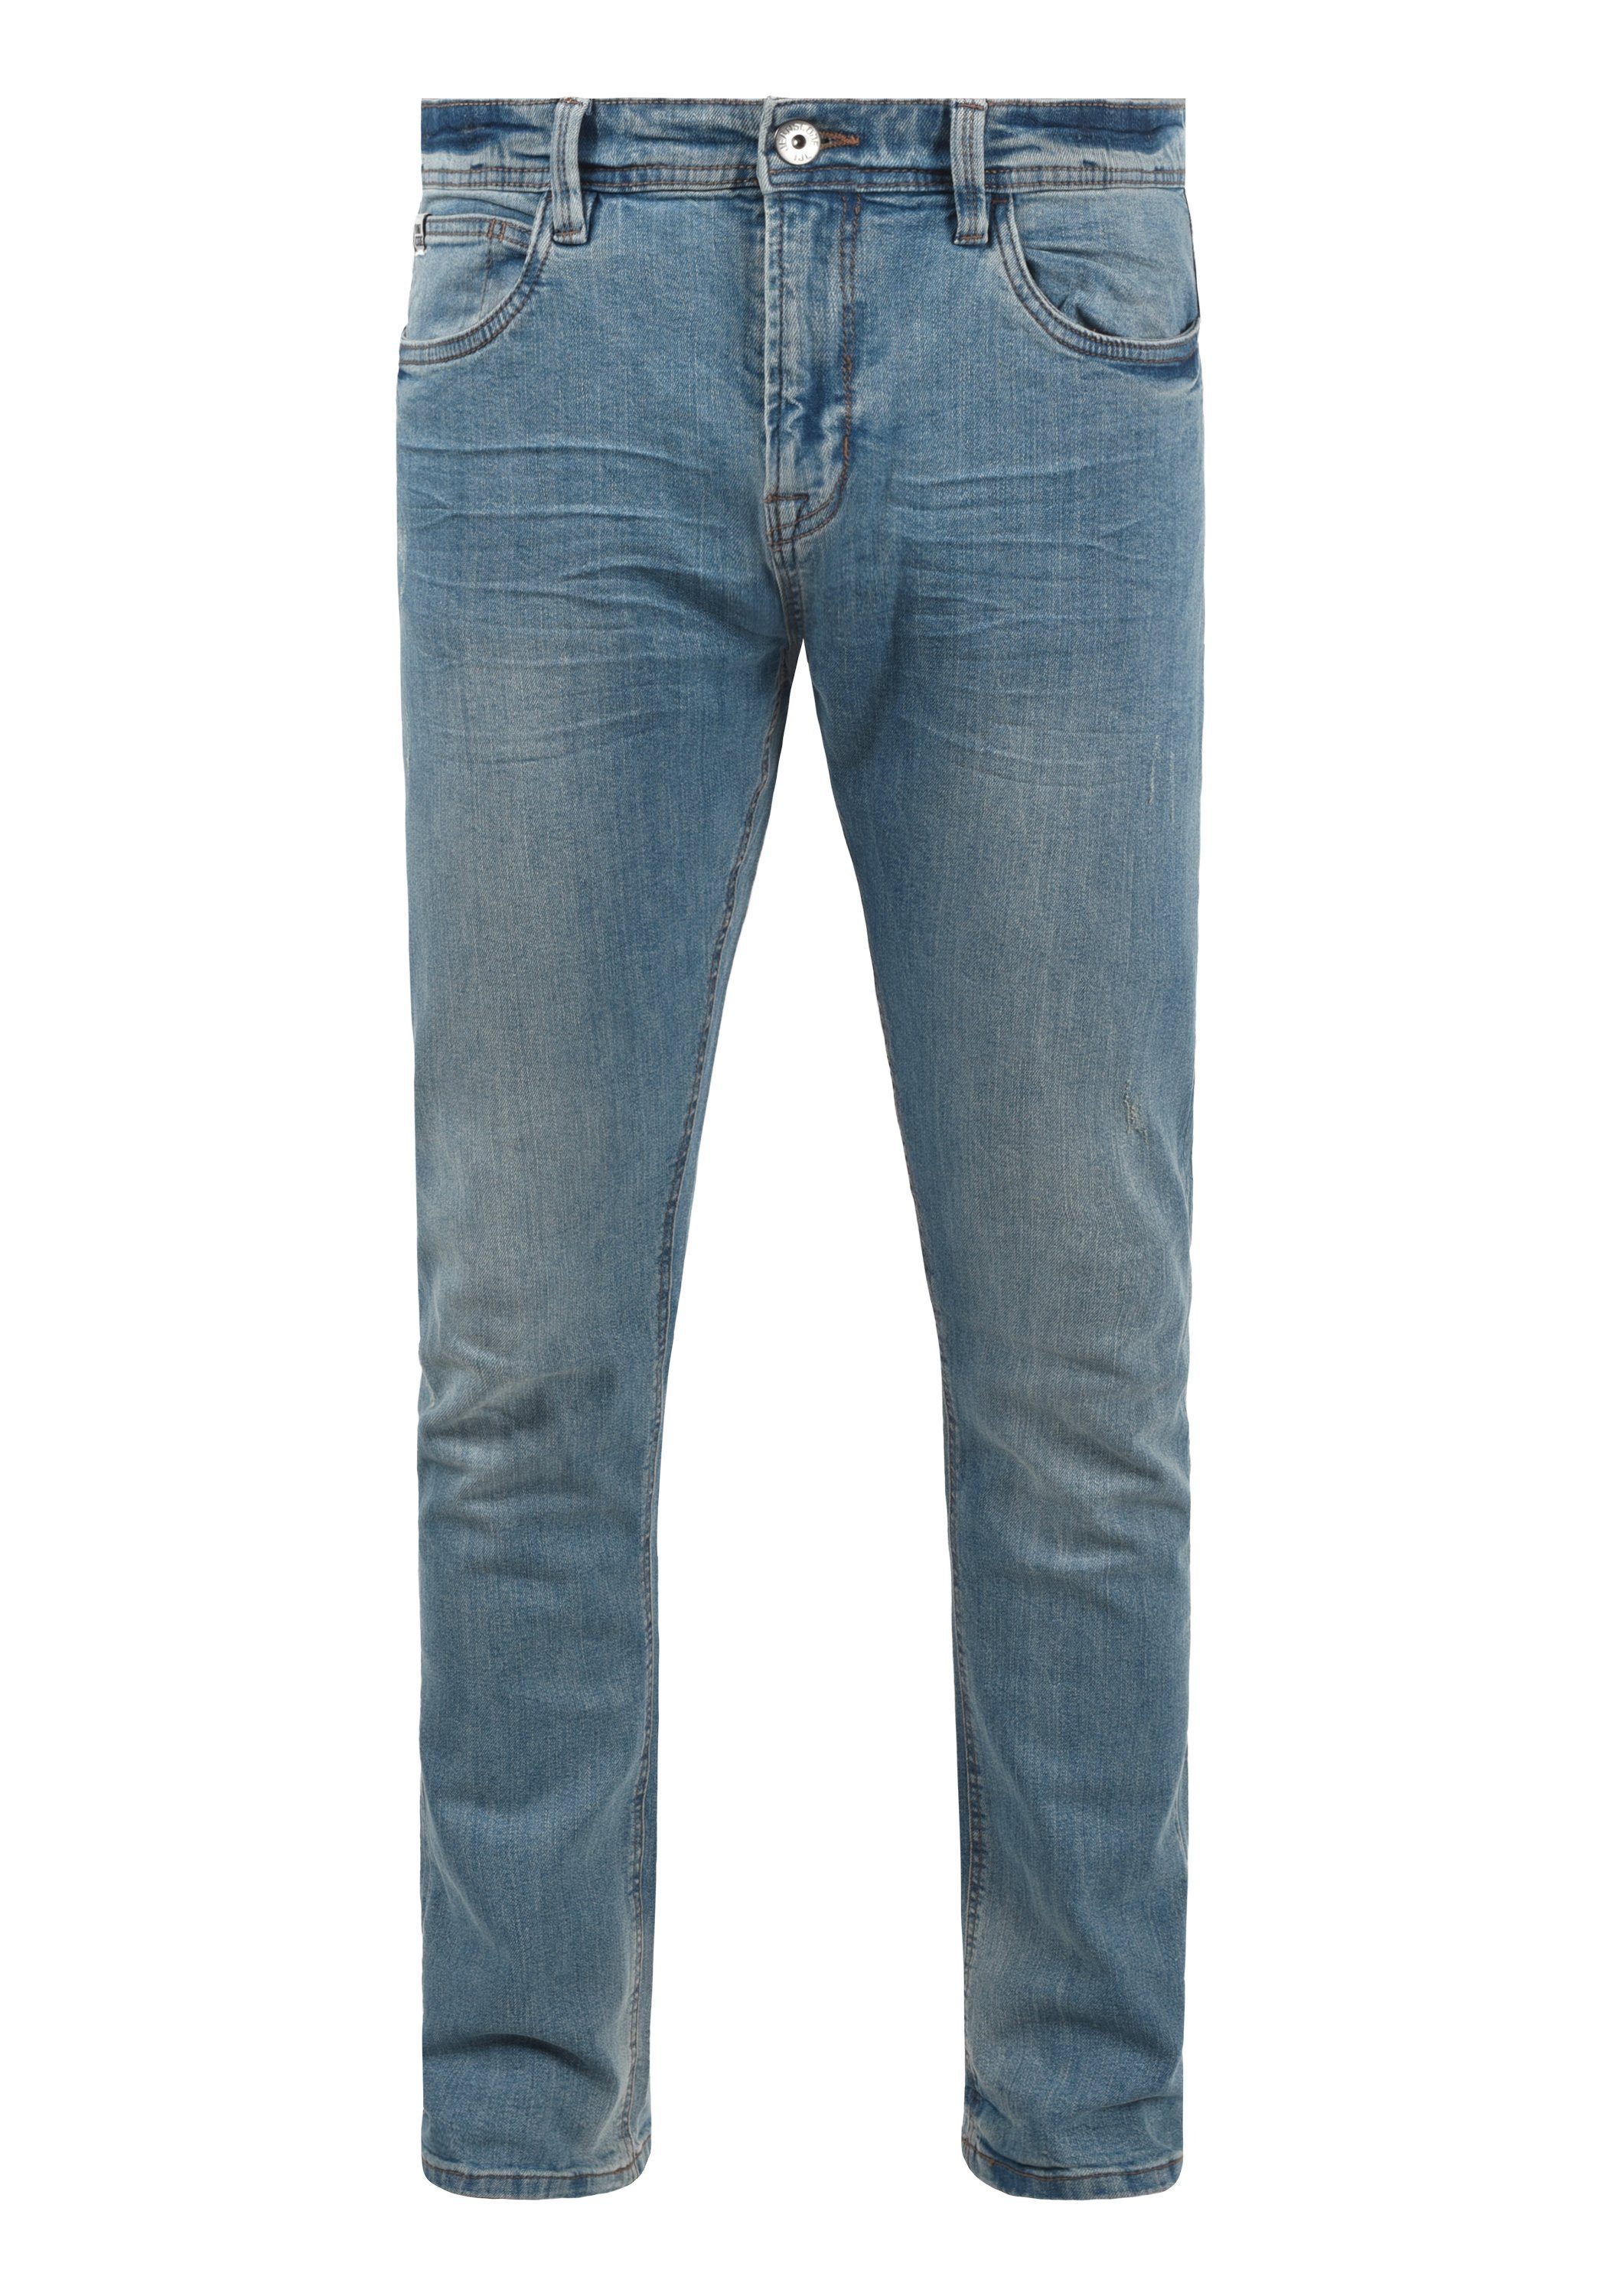 (1014) IDAldersgate 5-Pocket-Jeans Blue Indicode Wash